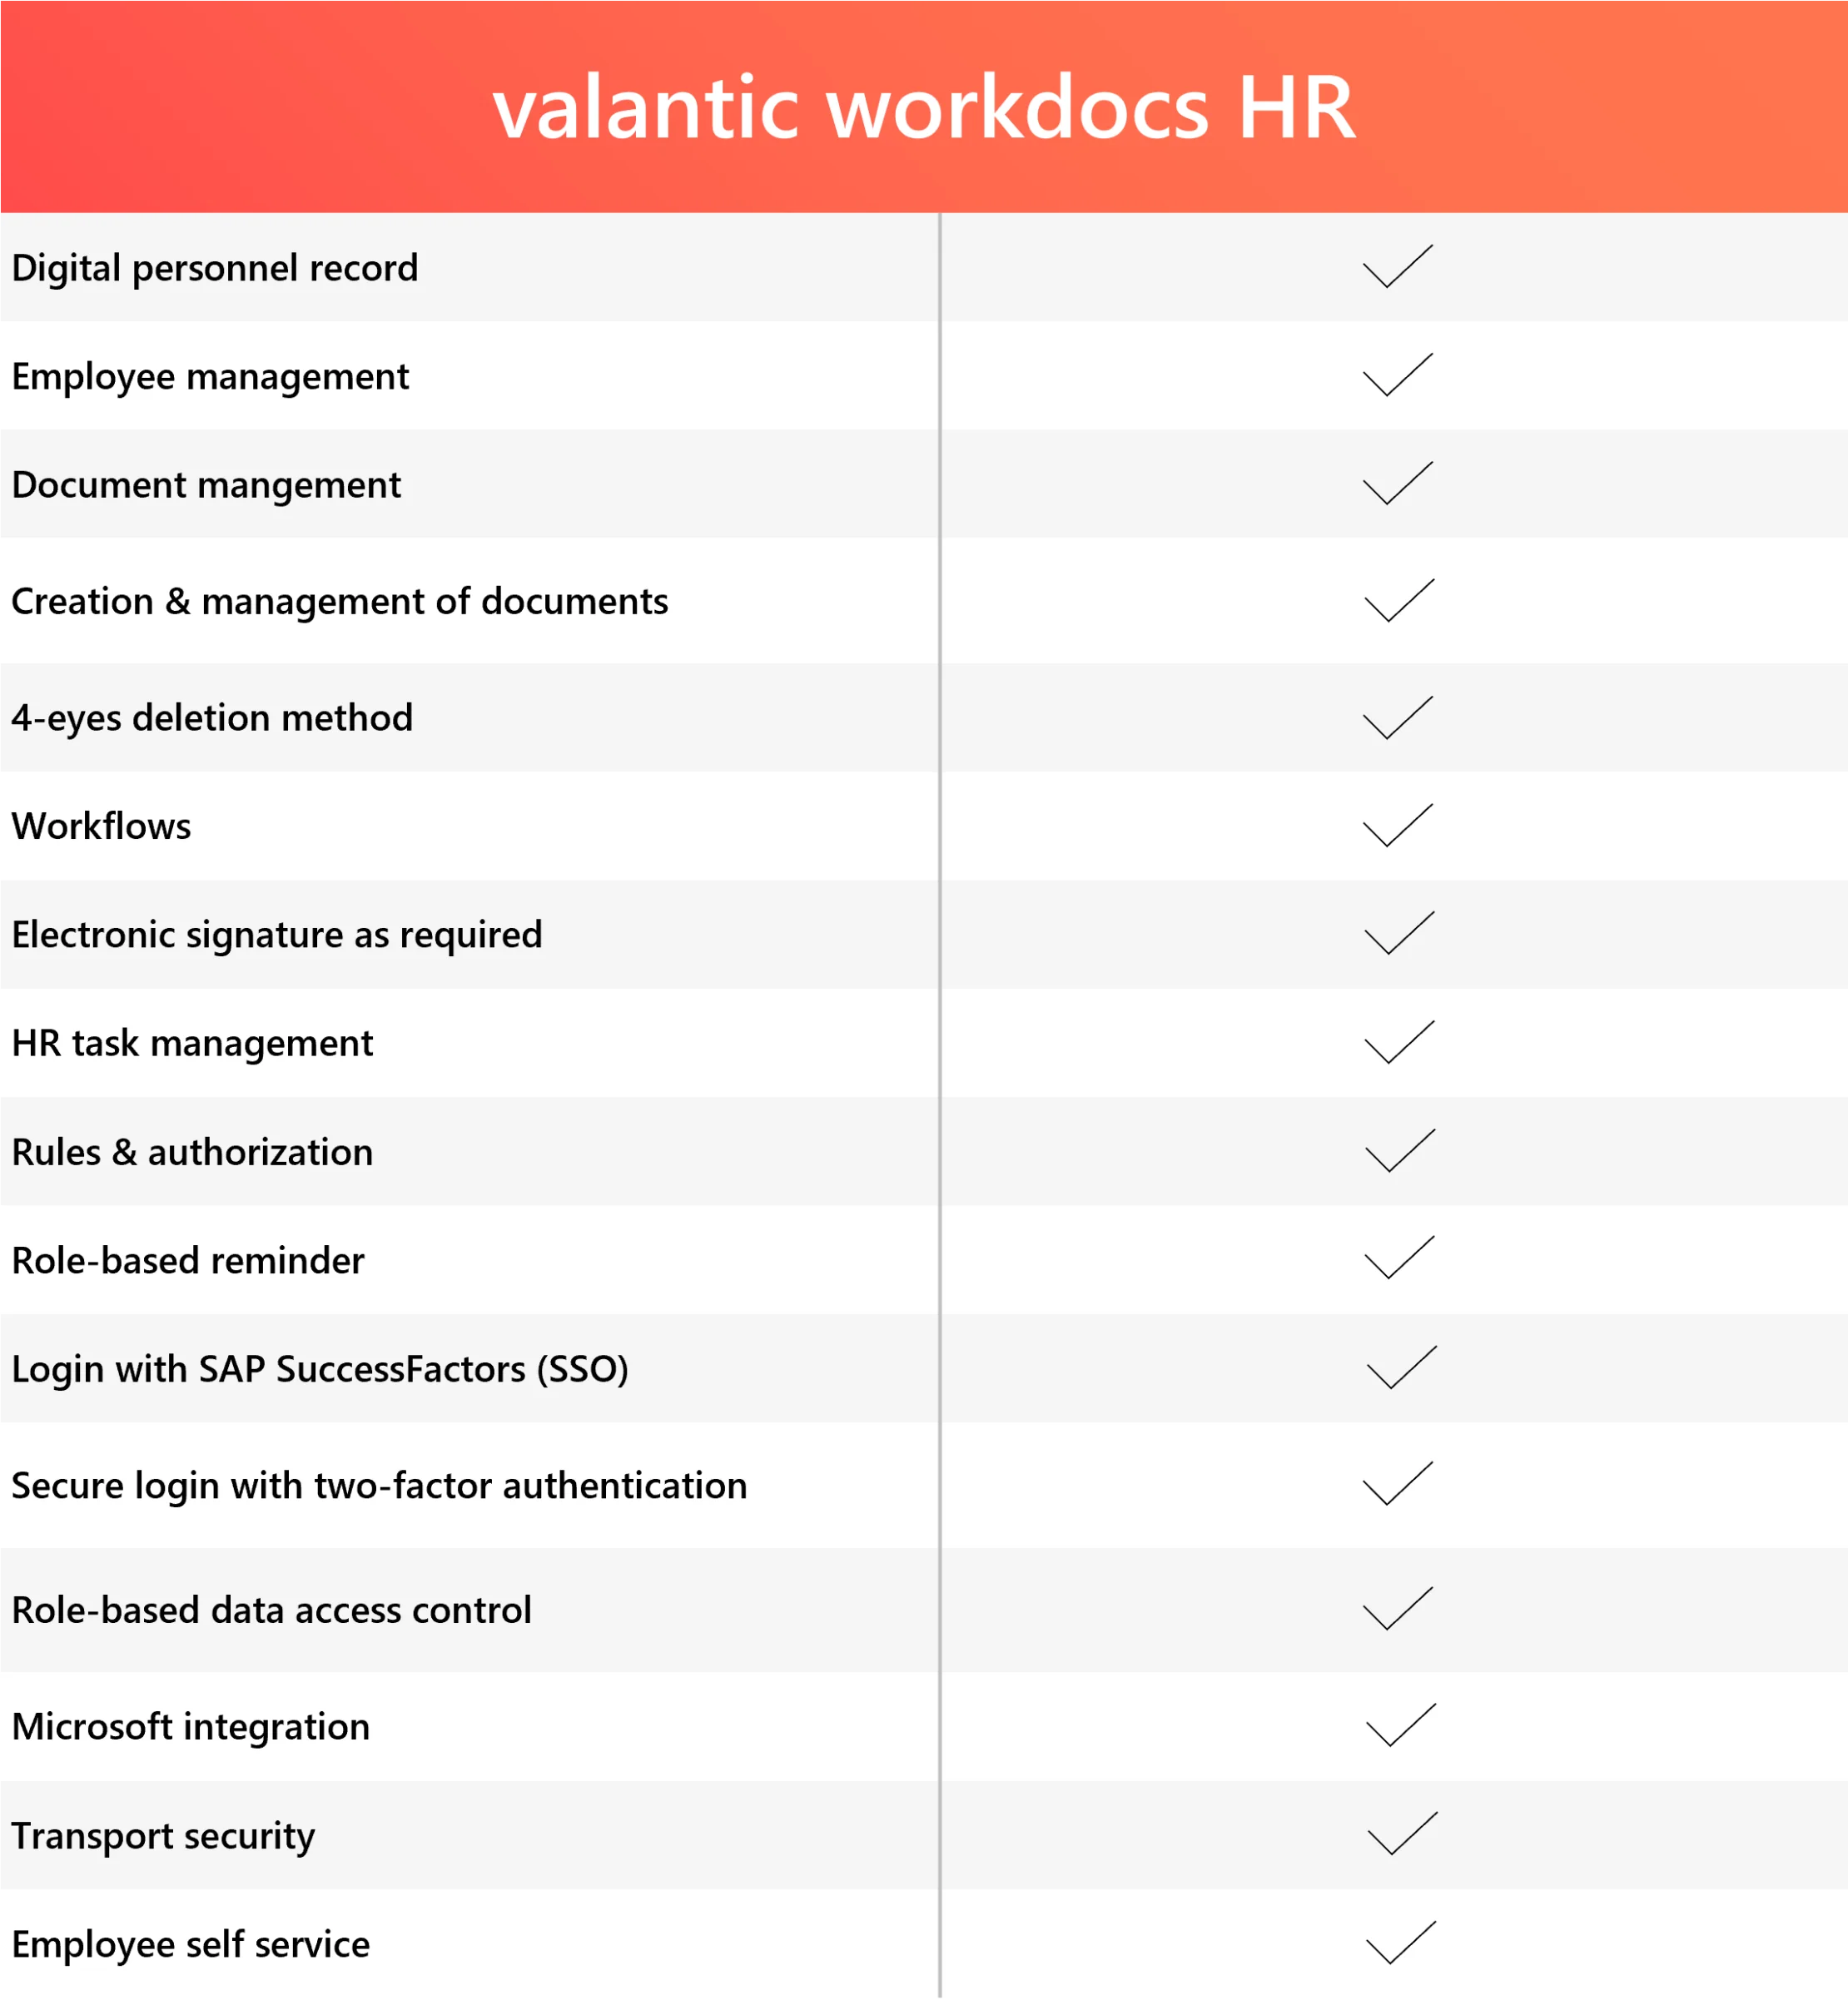 valantic workdocs HR checklist